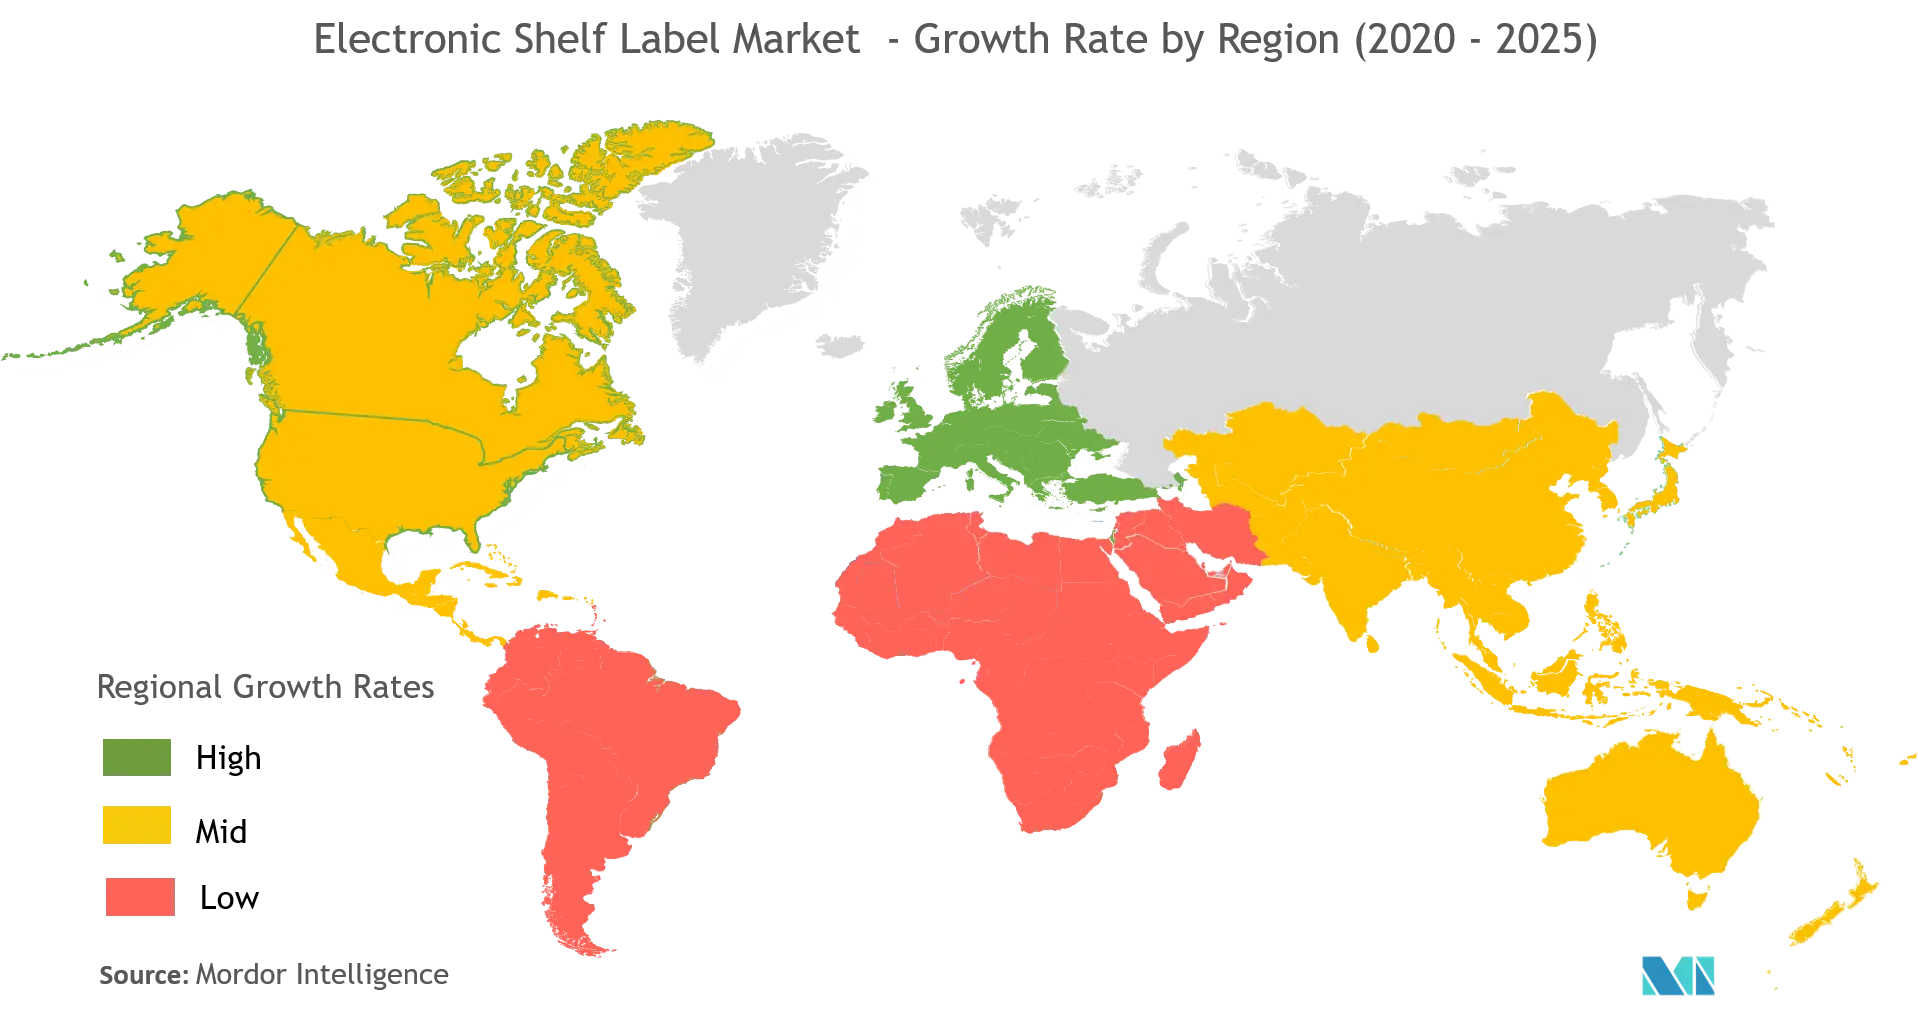 Electronic Shelf Label Market - Growth Rate by Region (2020 - 2025)